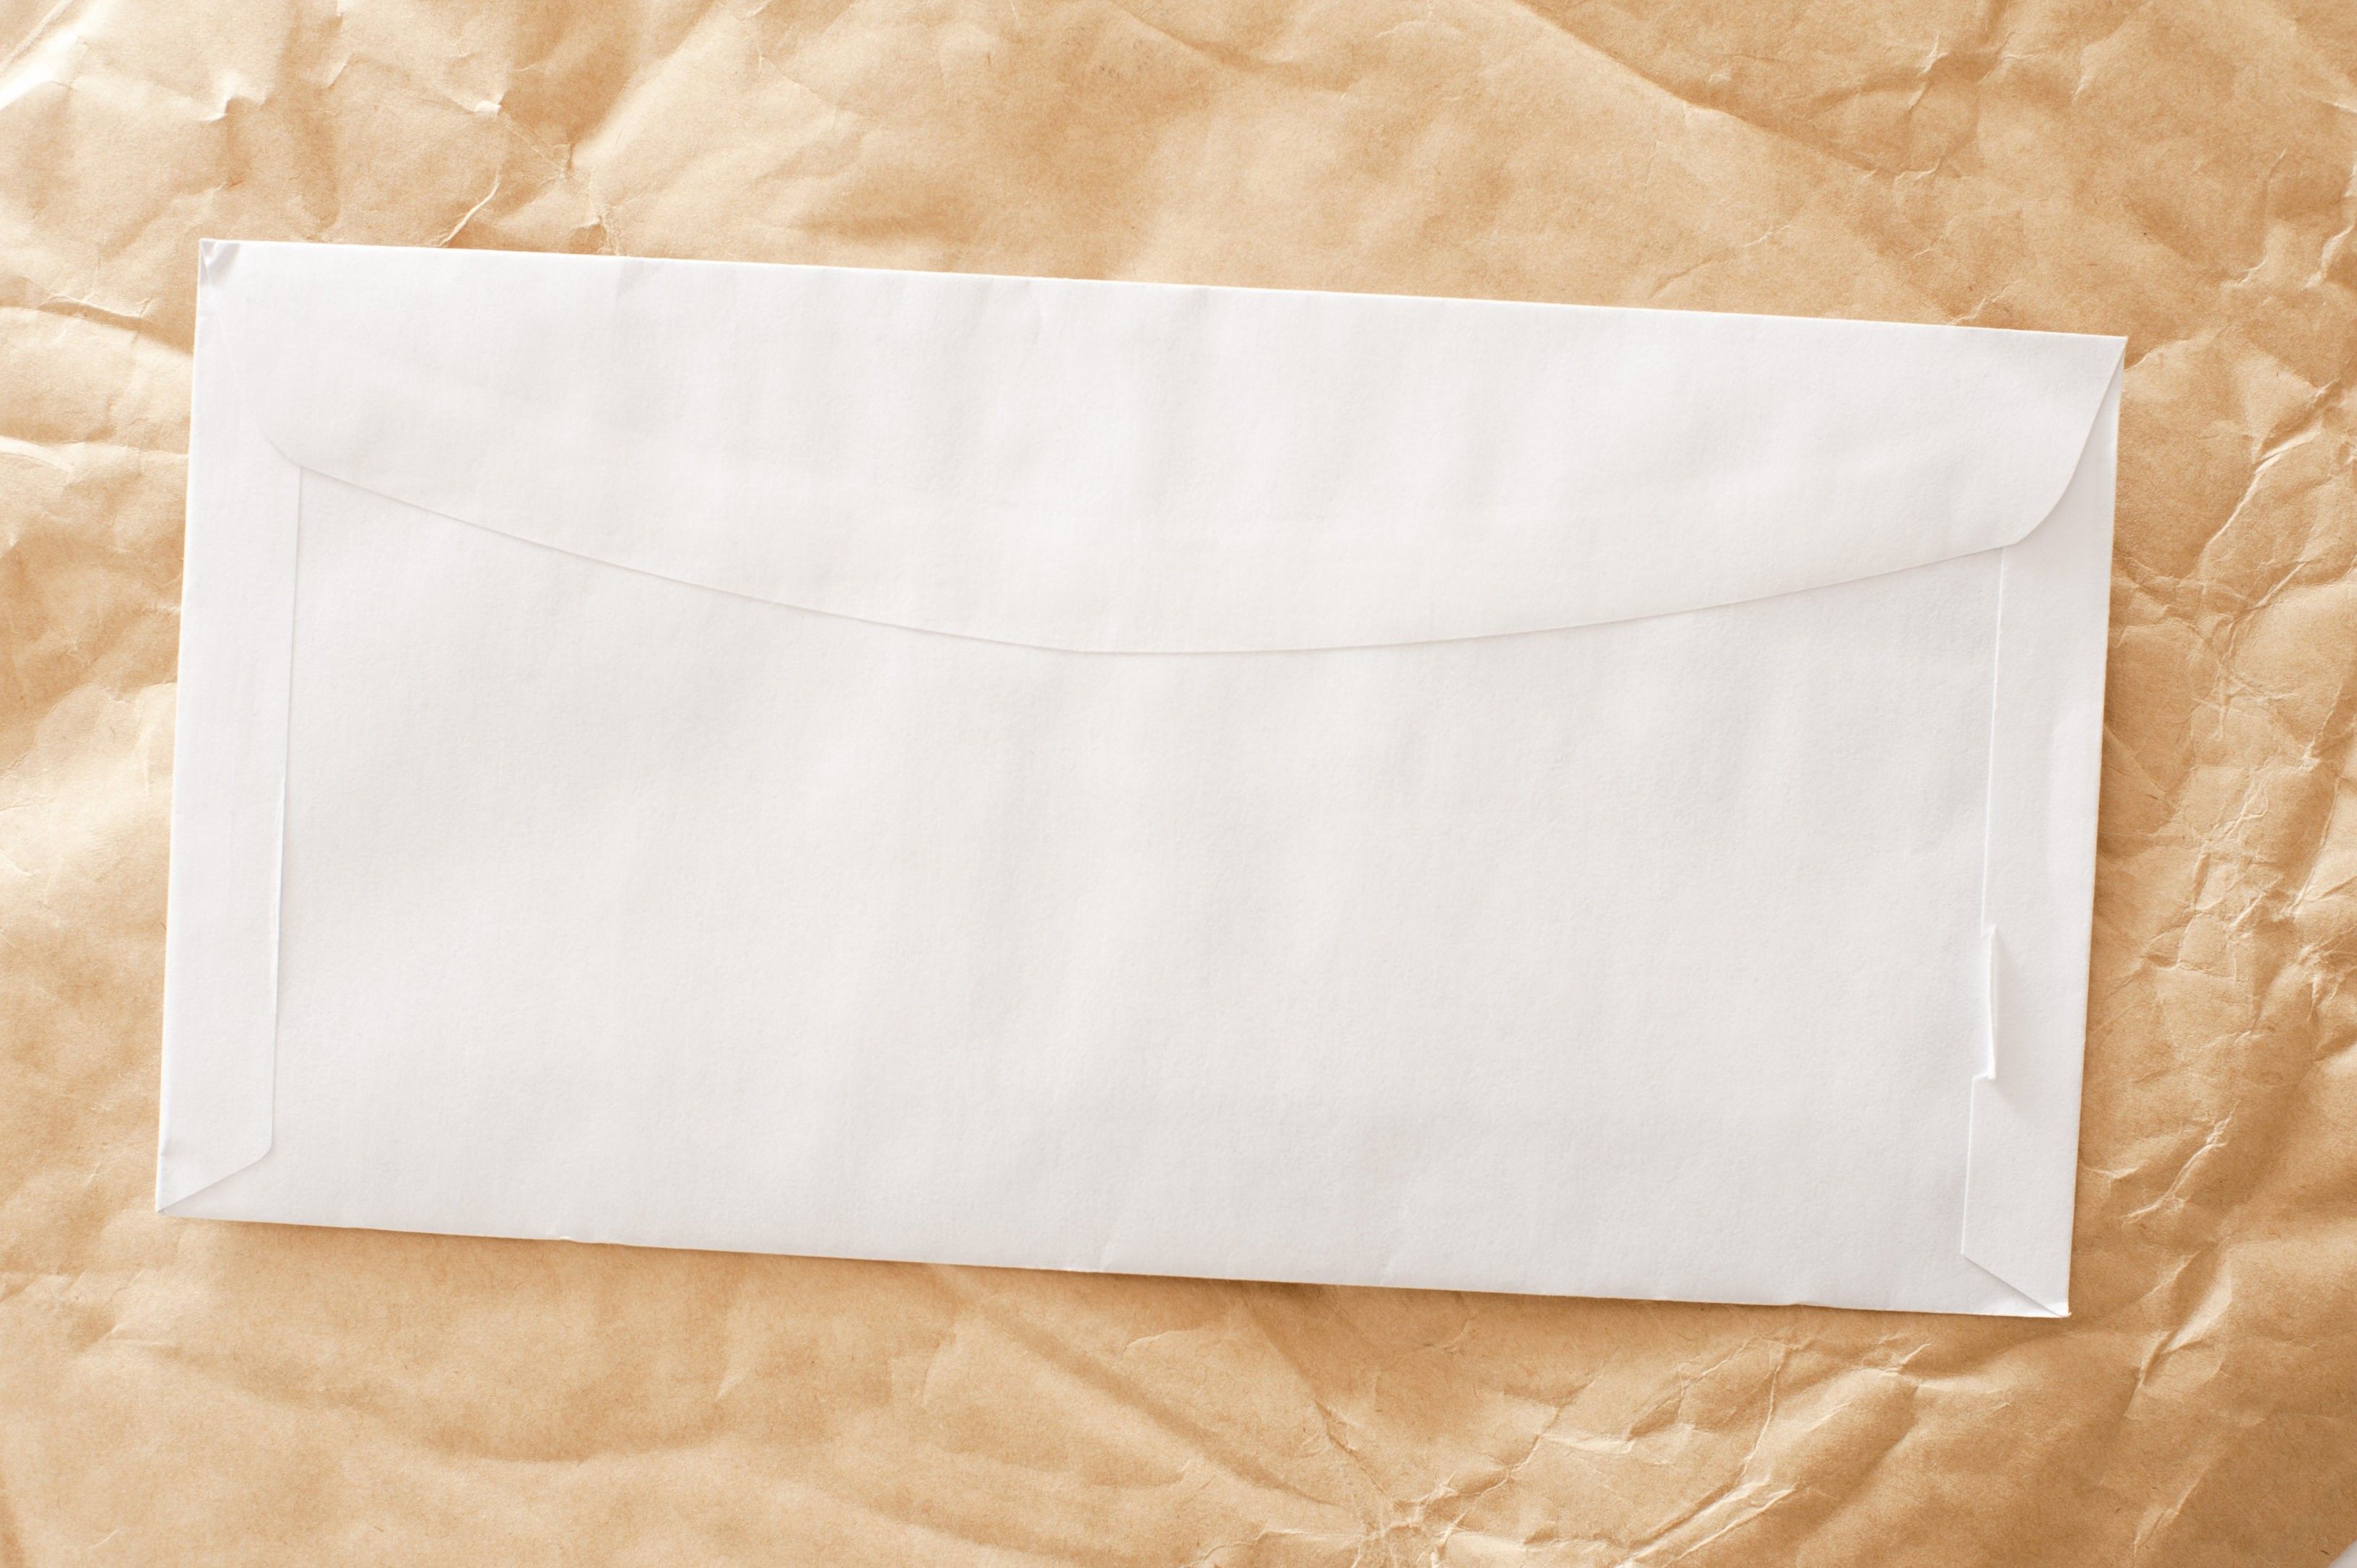 Envelope Wallpaper. Hogwarts Envelope Wallpaper, Envelope Wallpaper and Envelope Printing Wallpaper